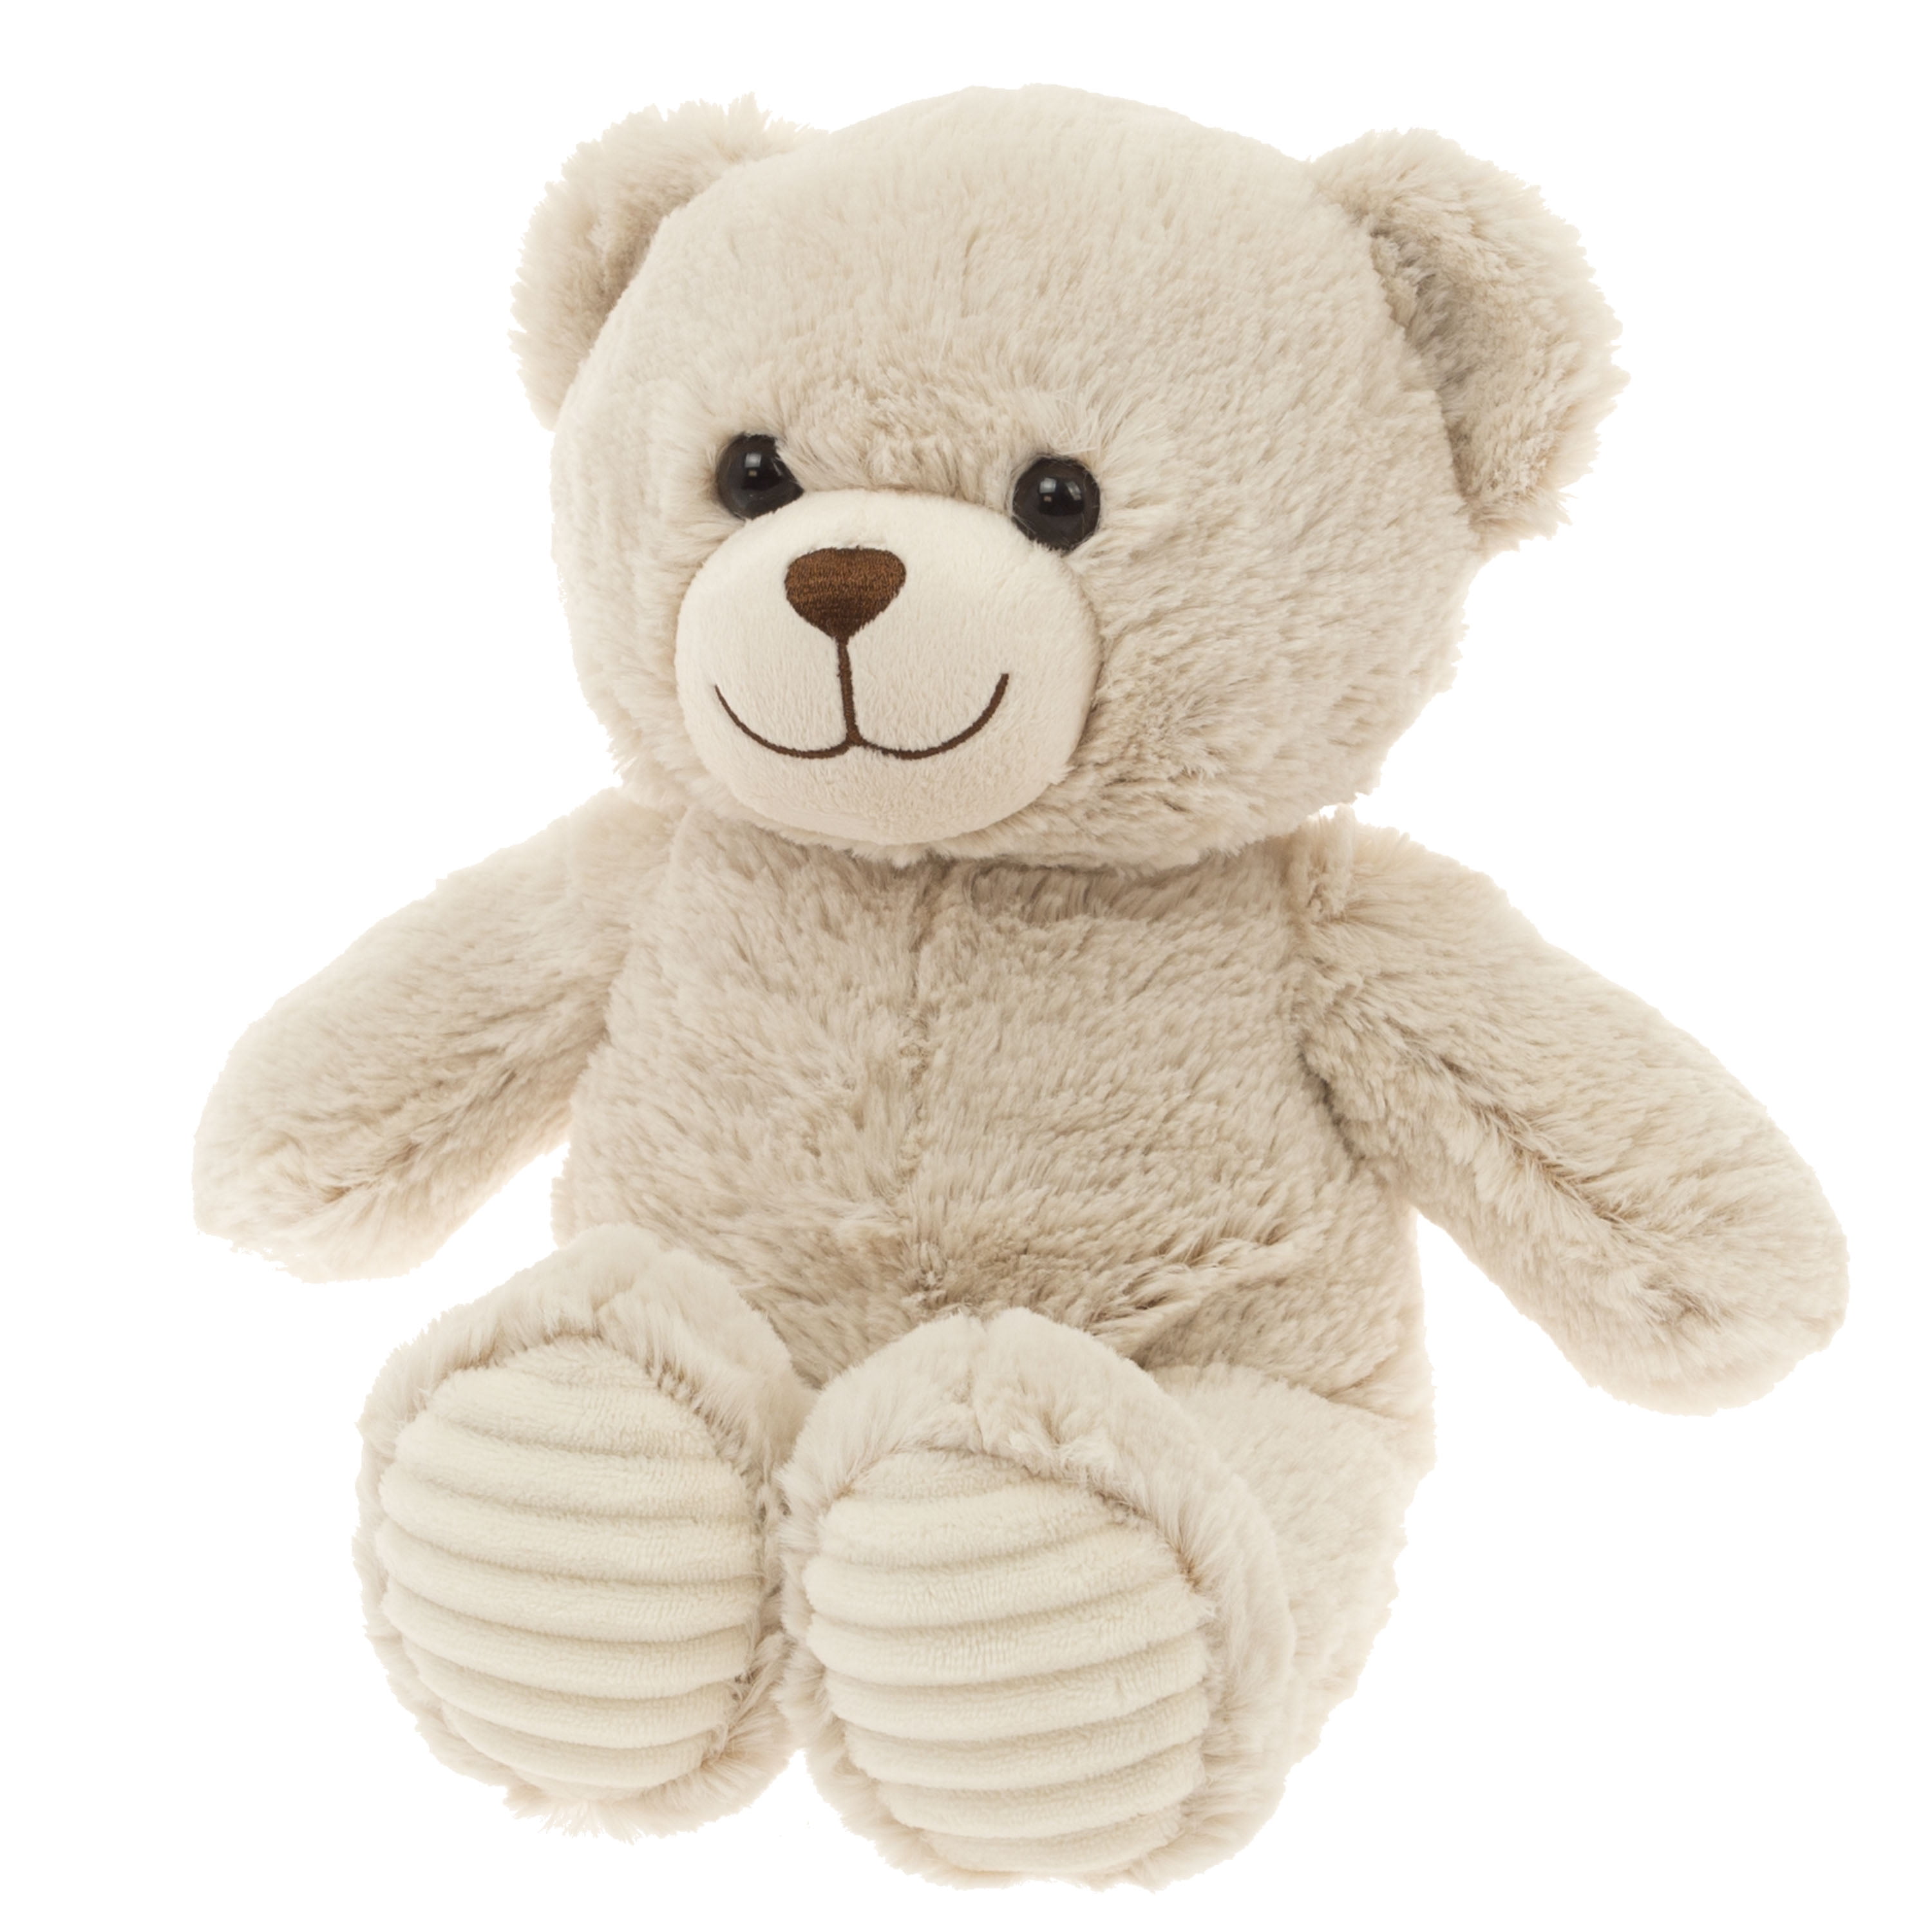 stuffed teddy bears walmart